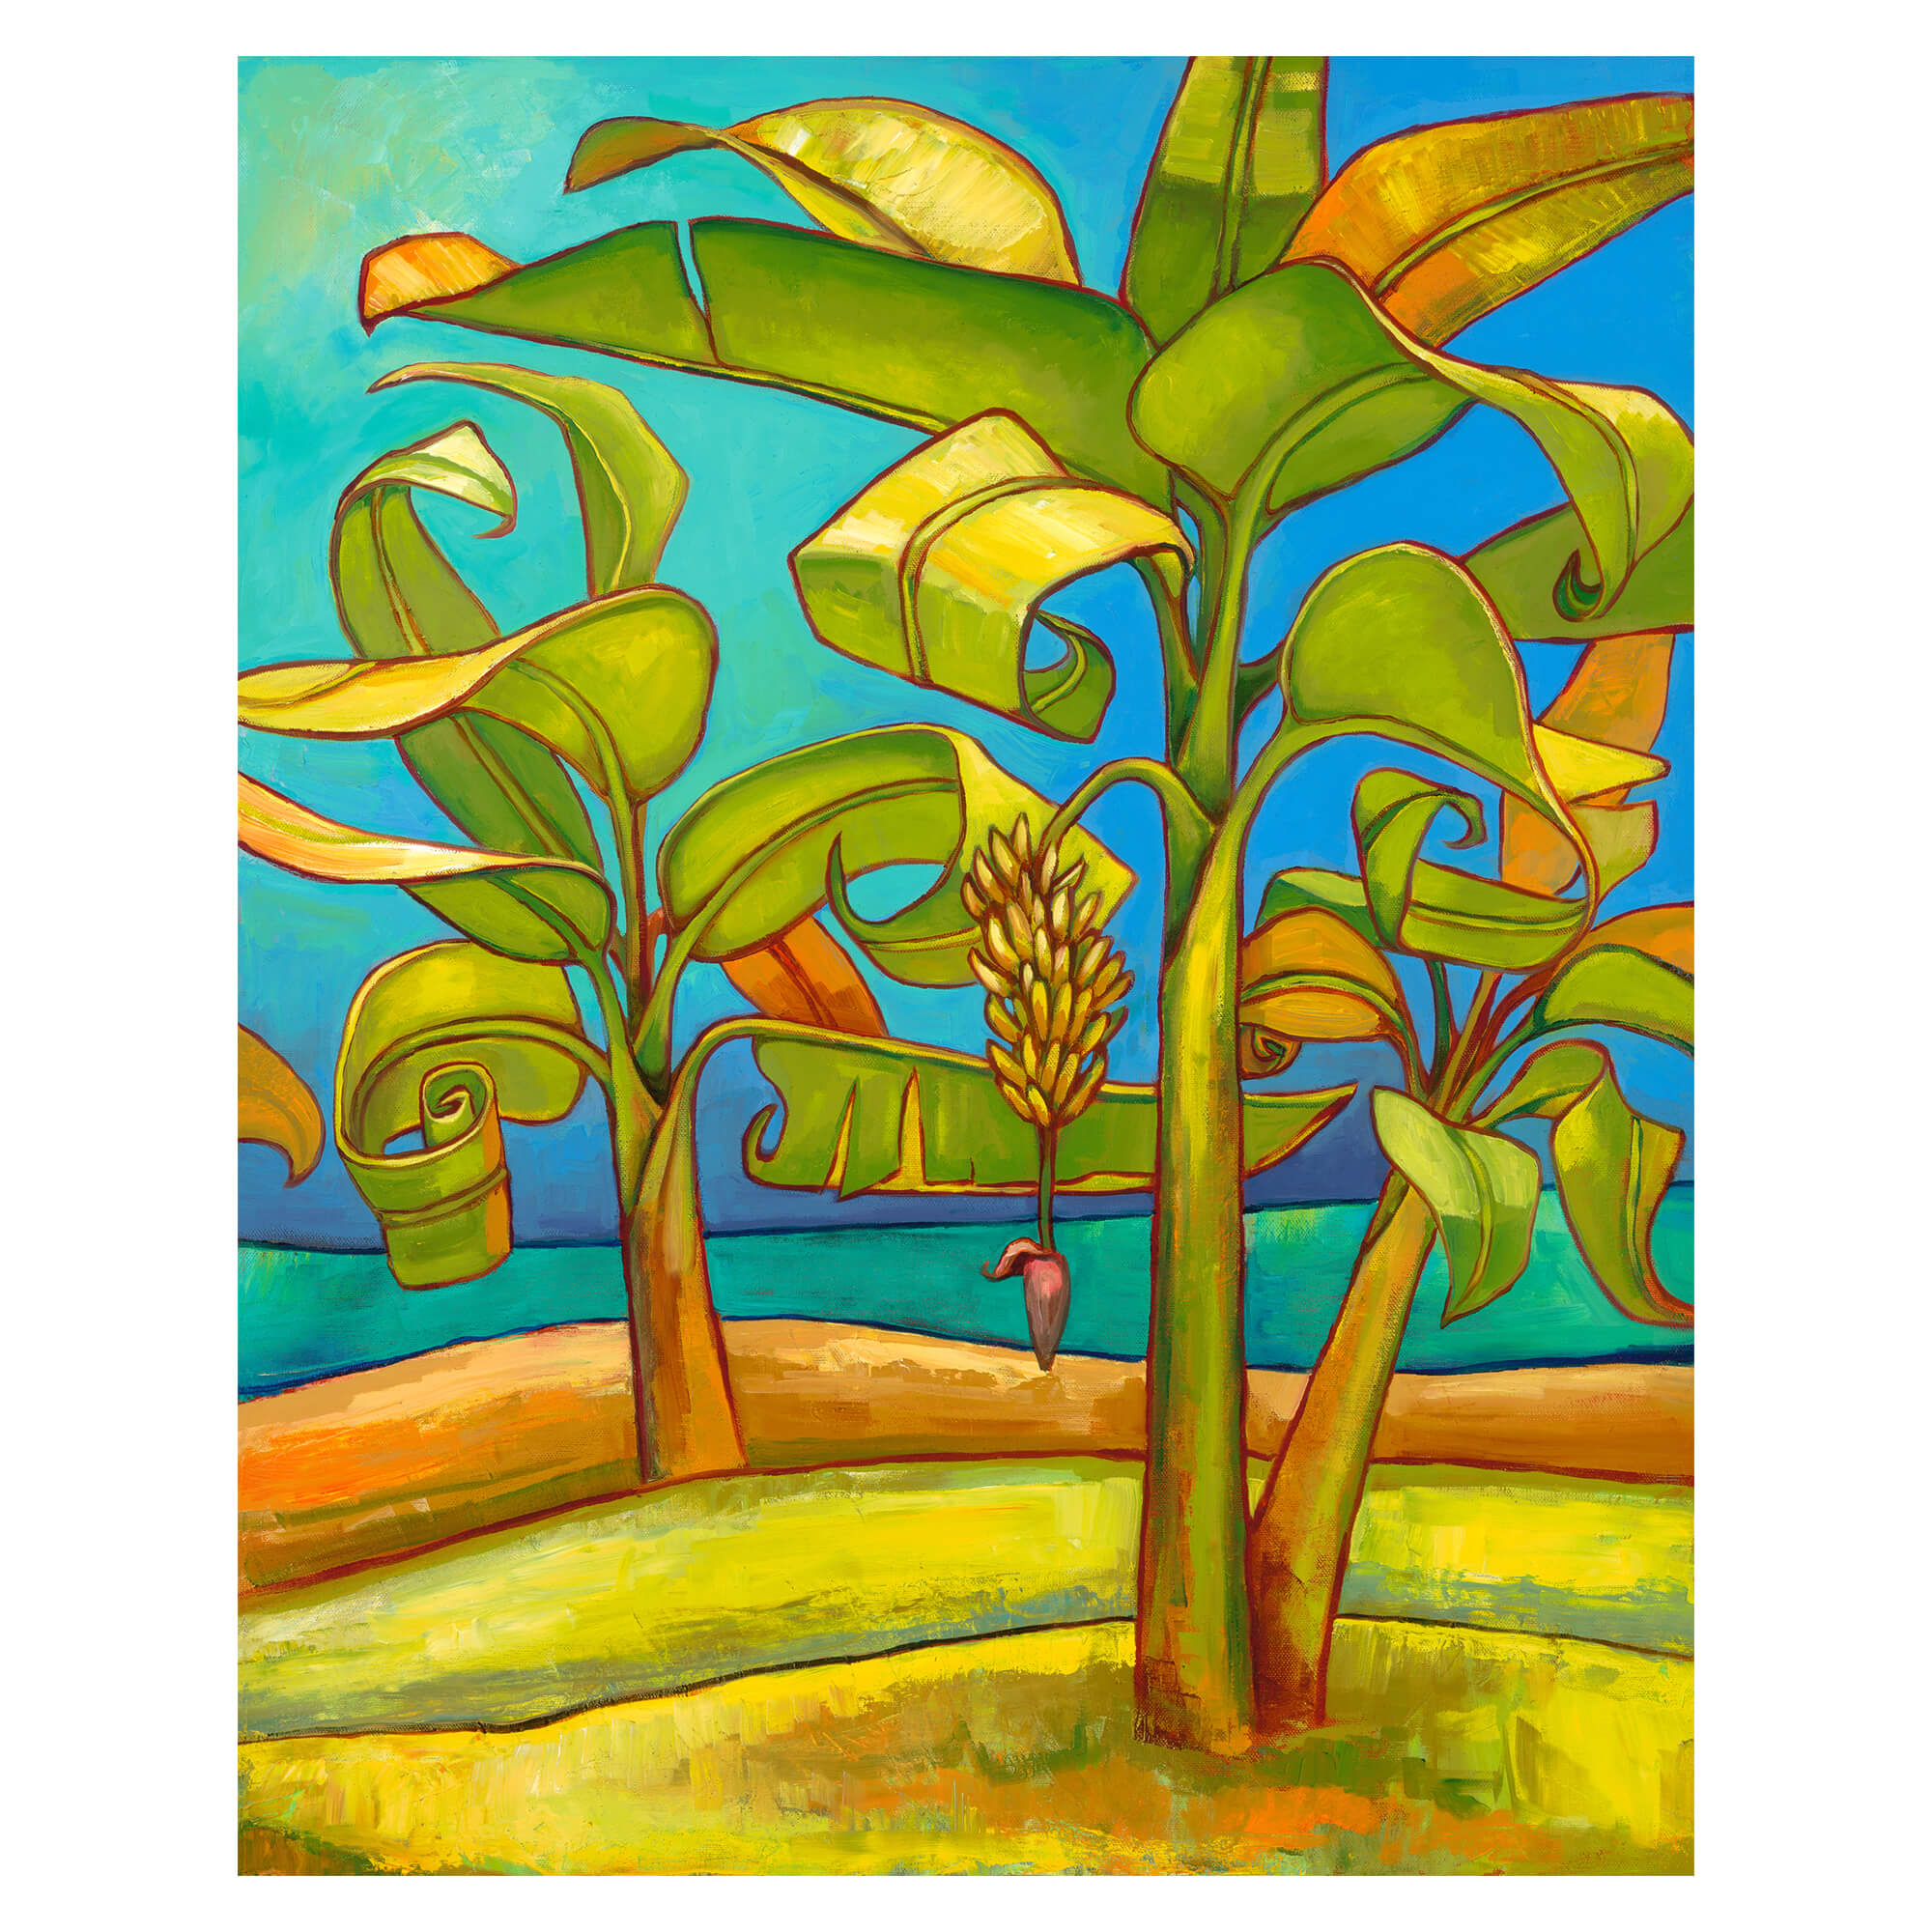 Banana trees in an island by Hawaii artist Colin Redican